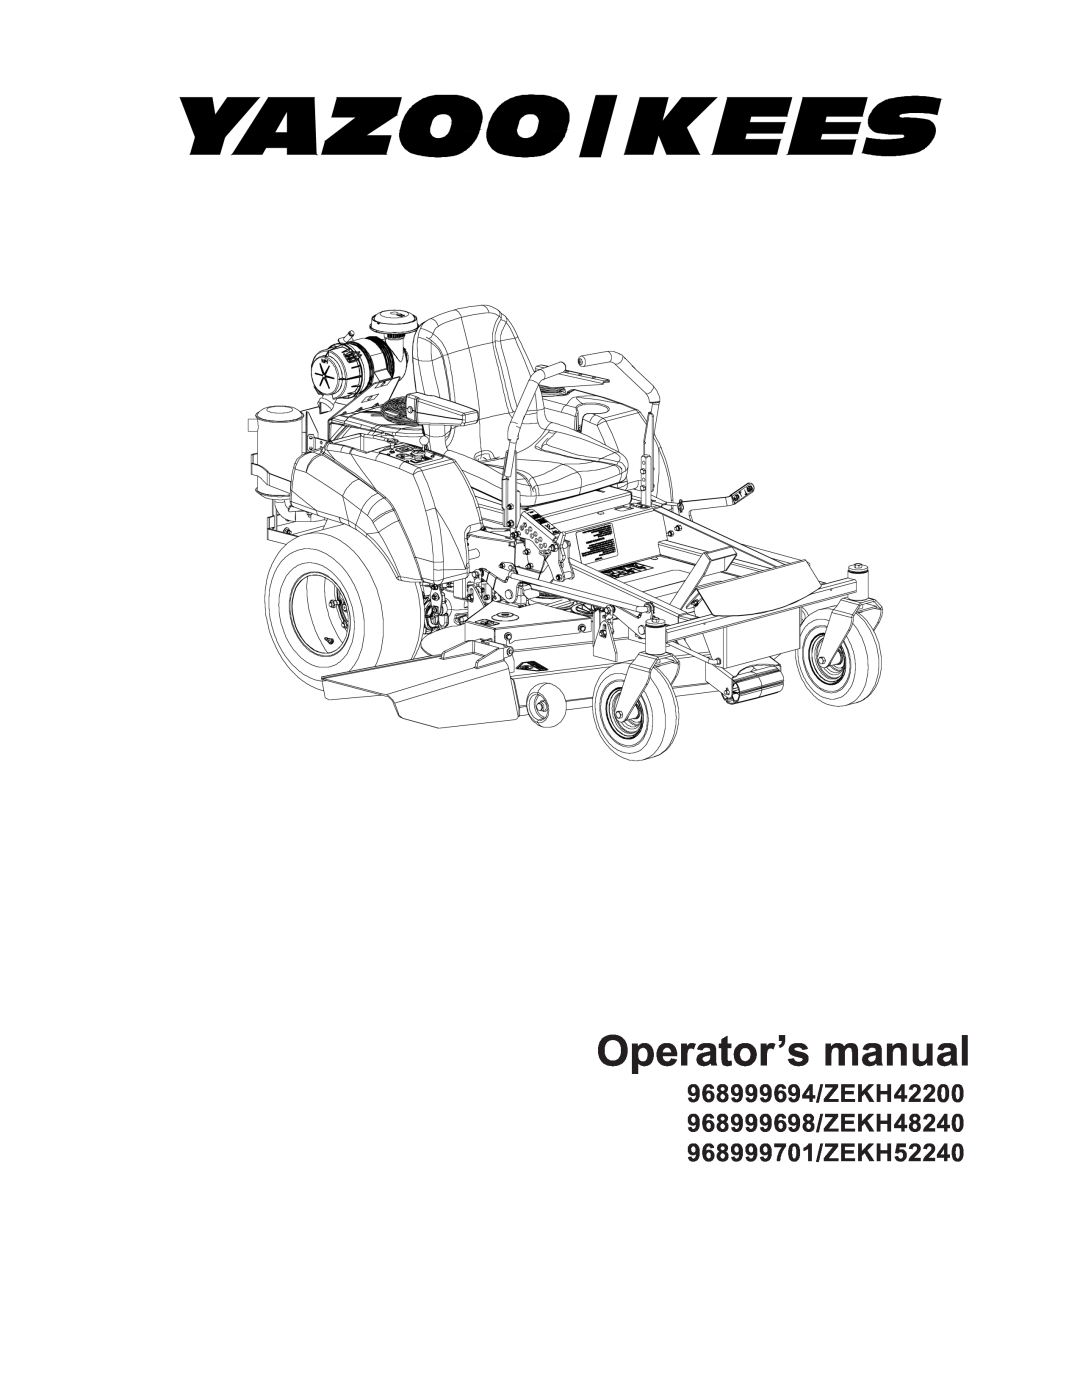 Yazoo/Kees manual Operator’s manual, 968999694/ZEKH42200 968999698/ZEKH48240 968999701/ZEKH52240 